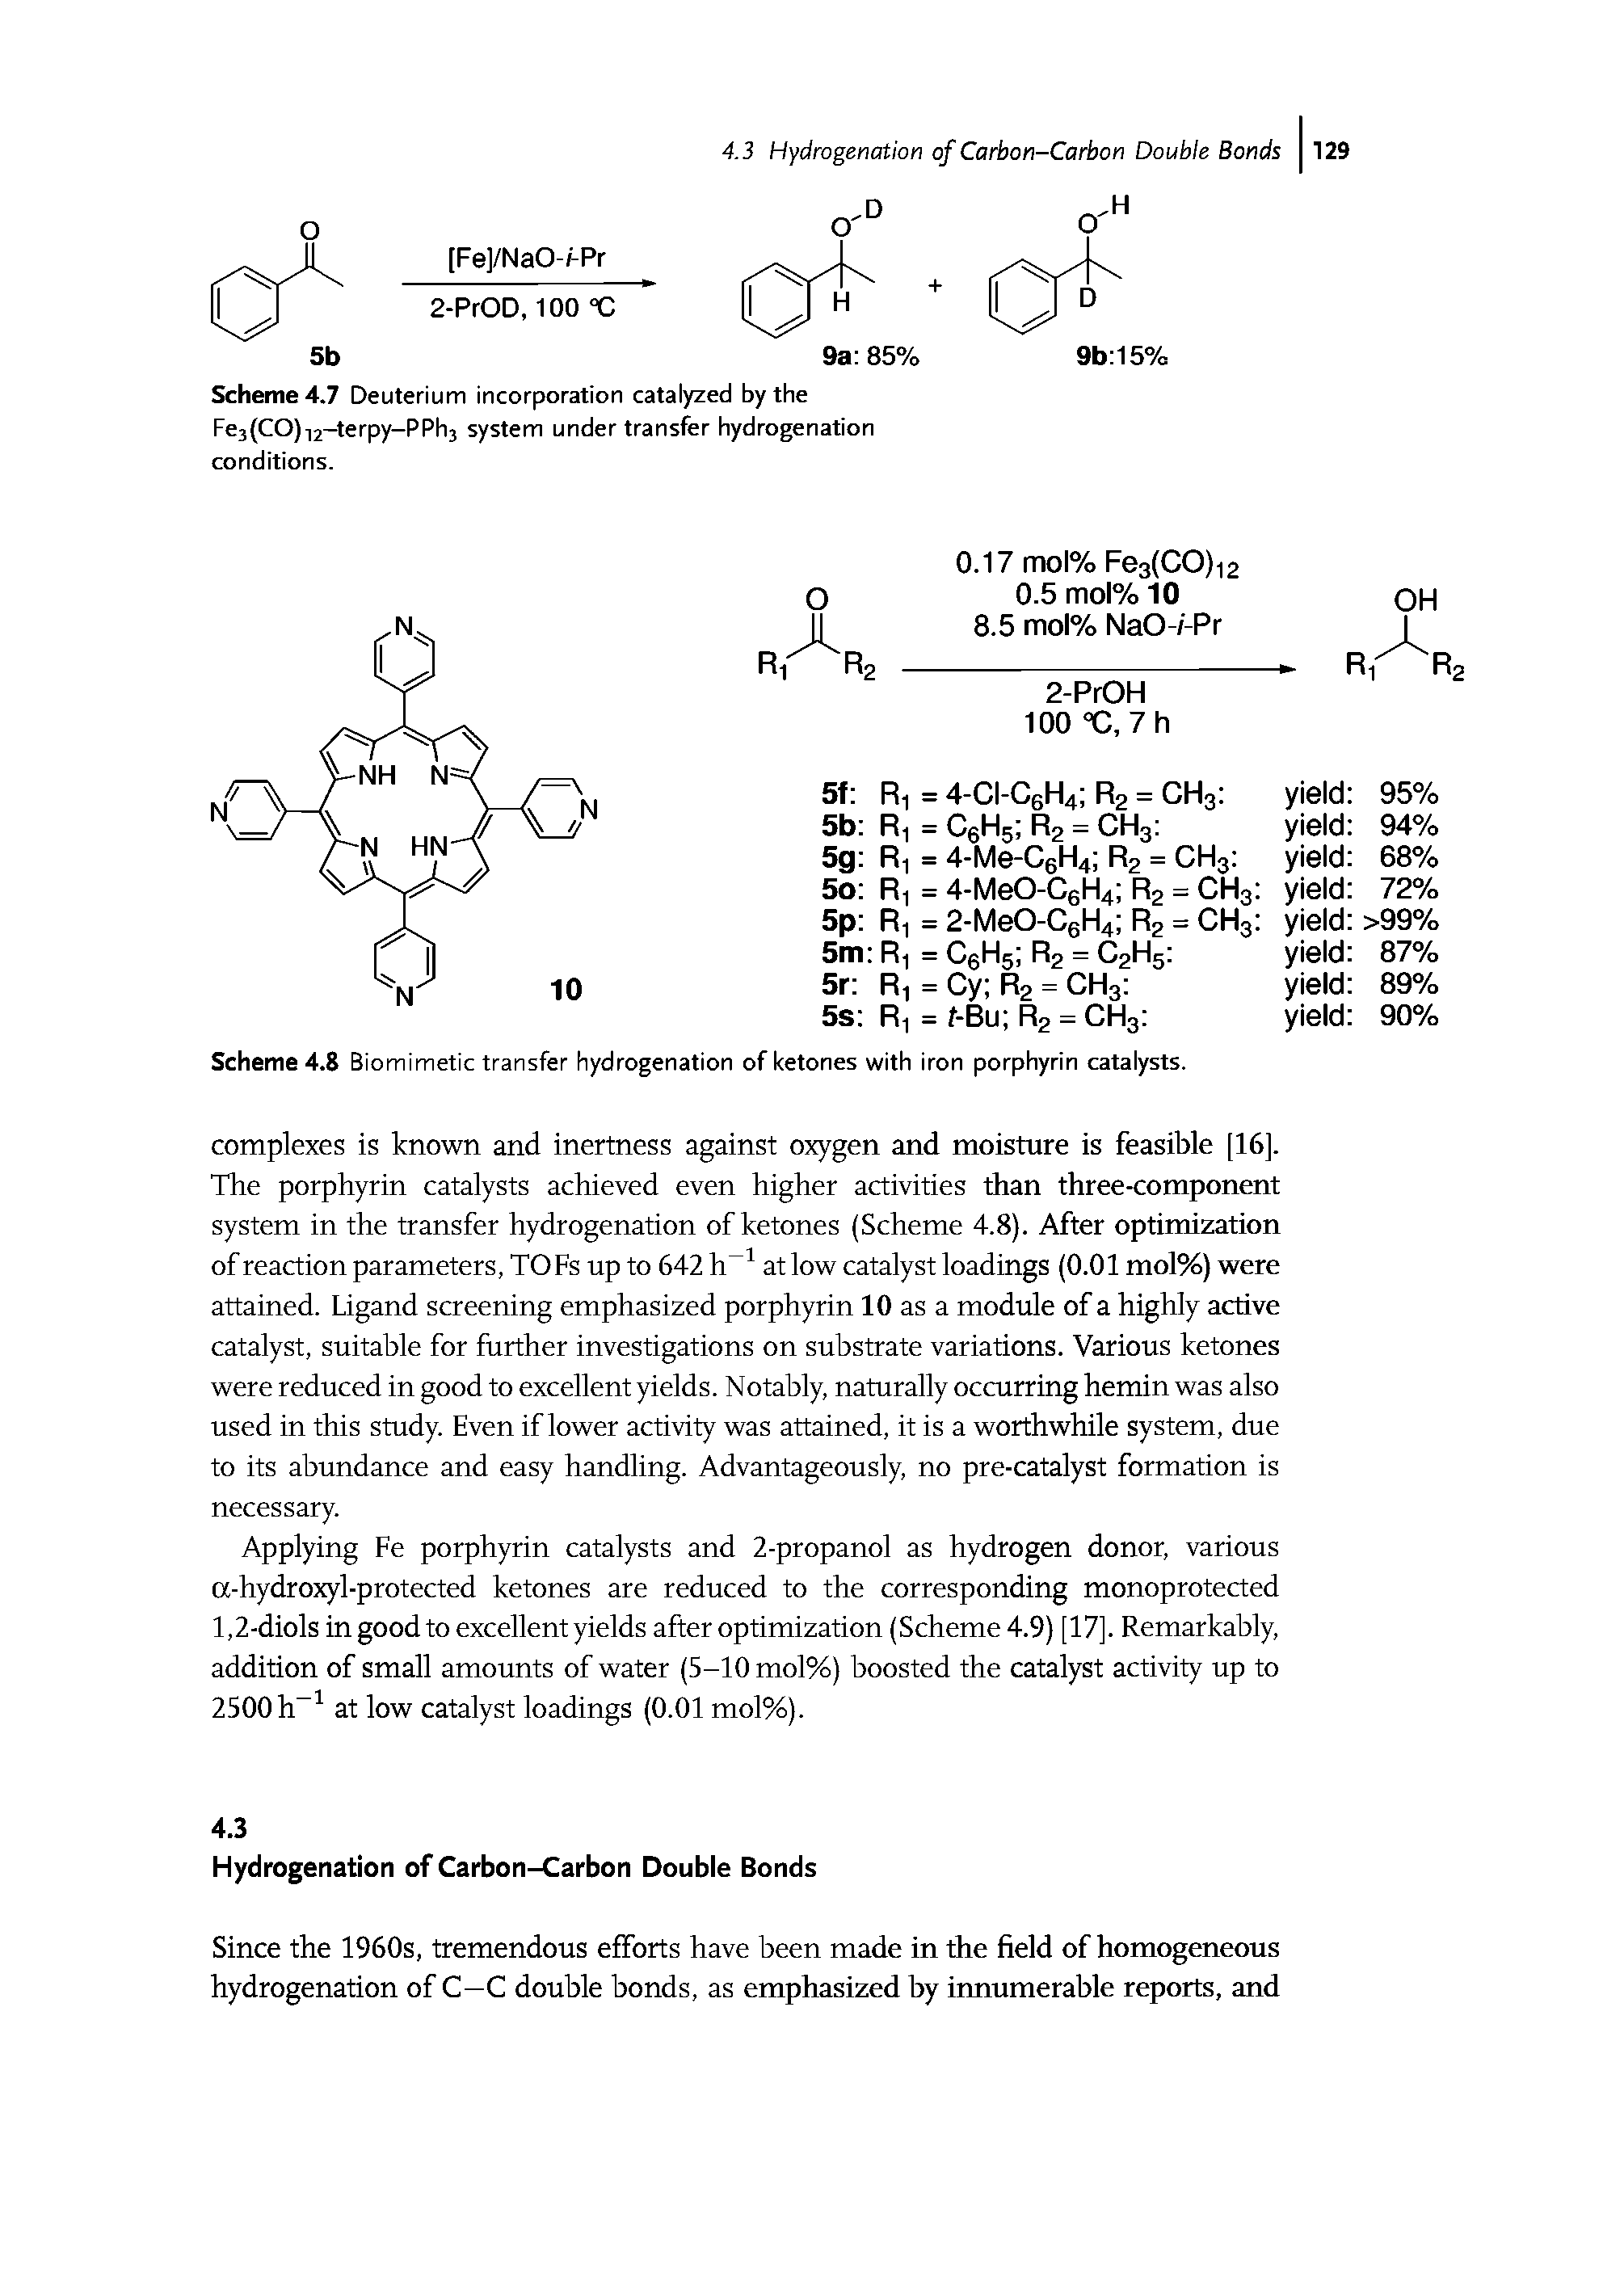 Scheme 4.8 Biomimetic transfer hydrogenation of ketones with iron porphyrin catalysts.